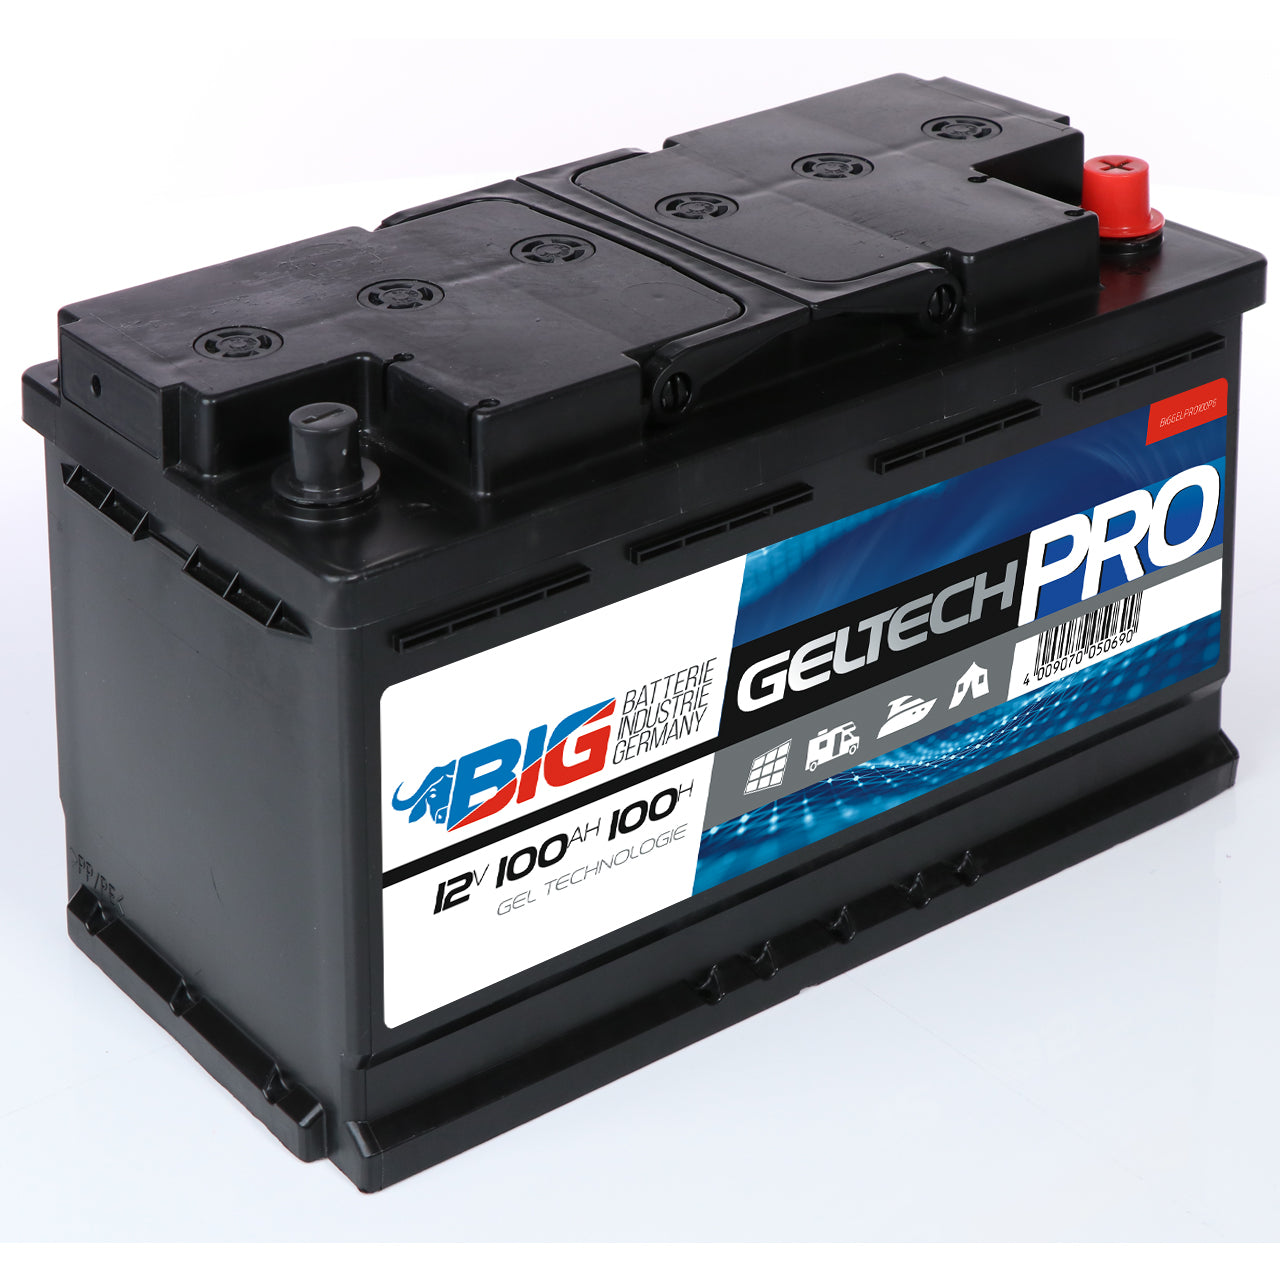 Wohnmobilbatterie Gel mit langsamer Entladung Powerlib' RG-1Q1161C5